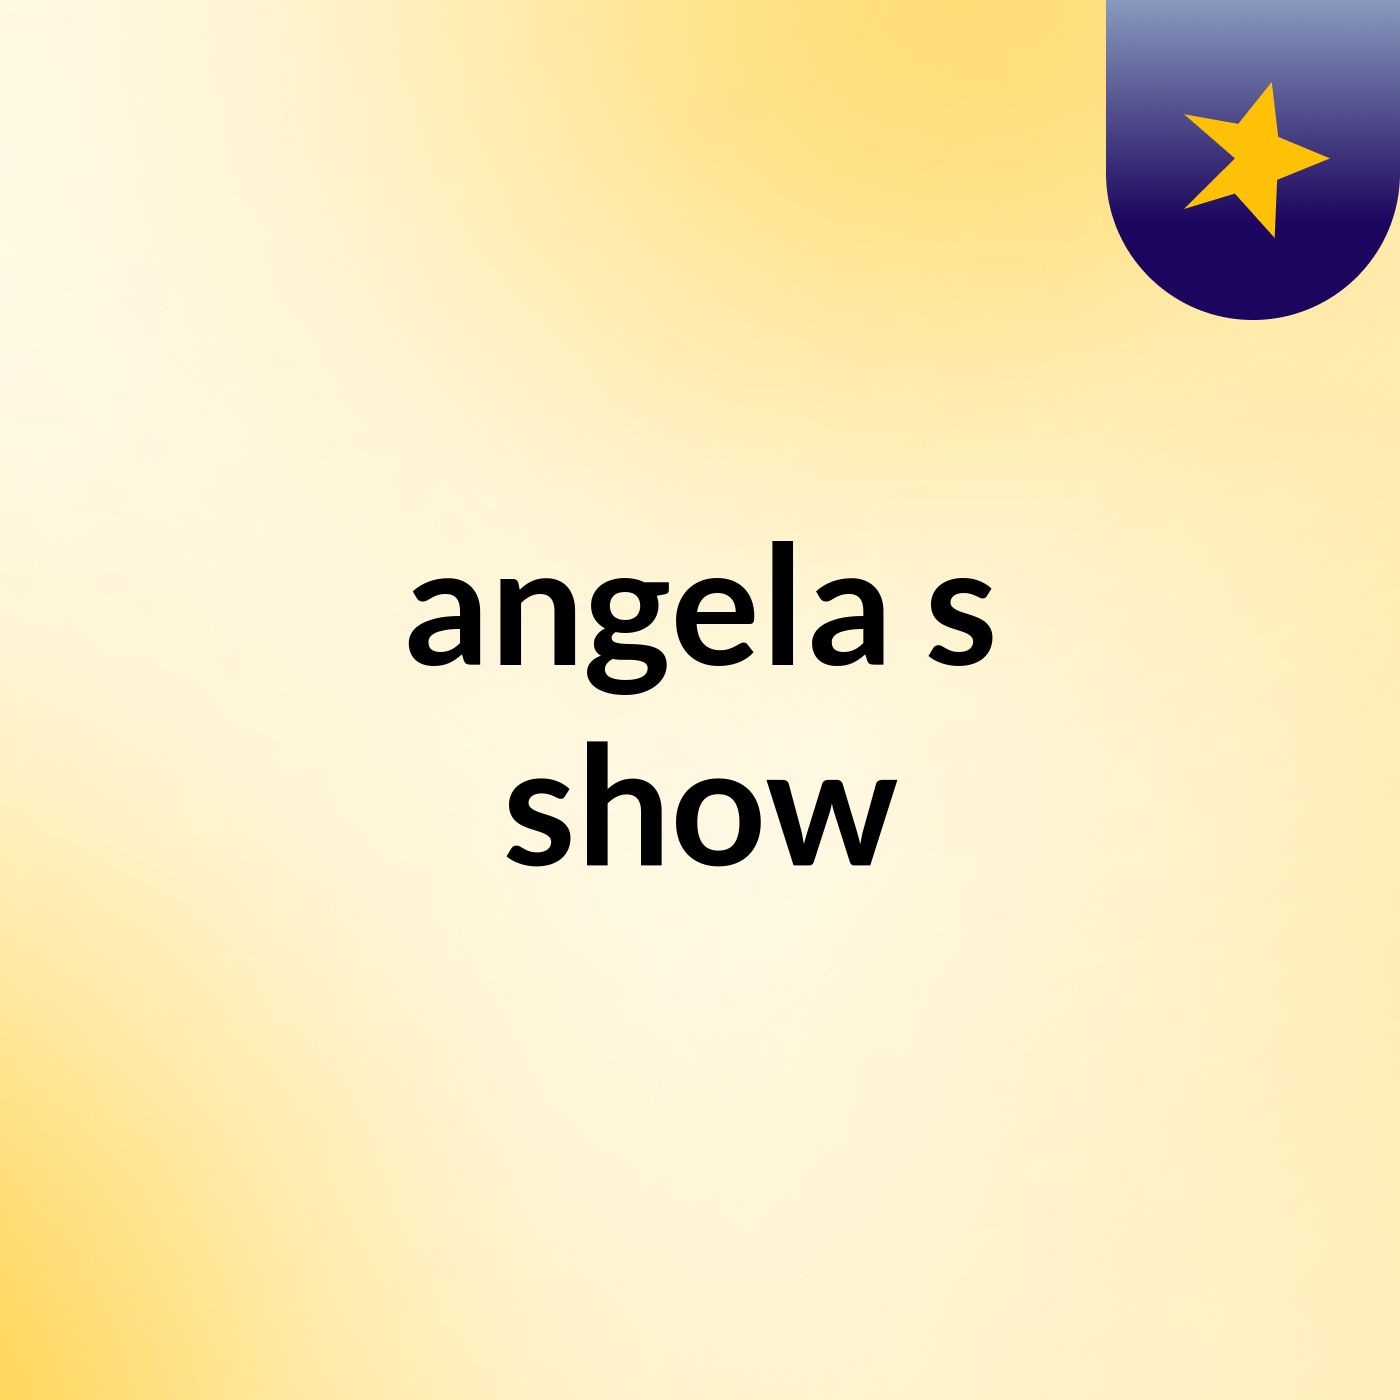 angela's show